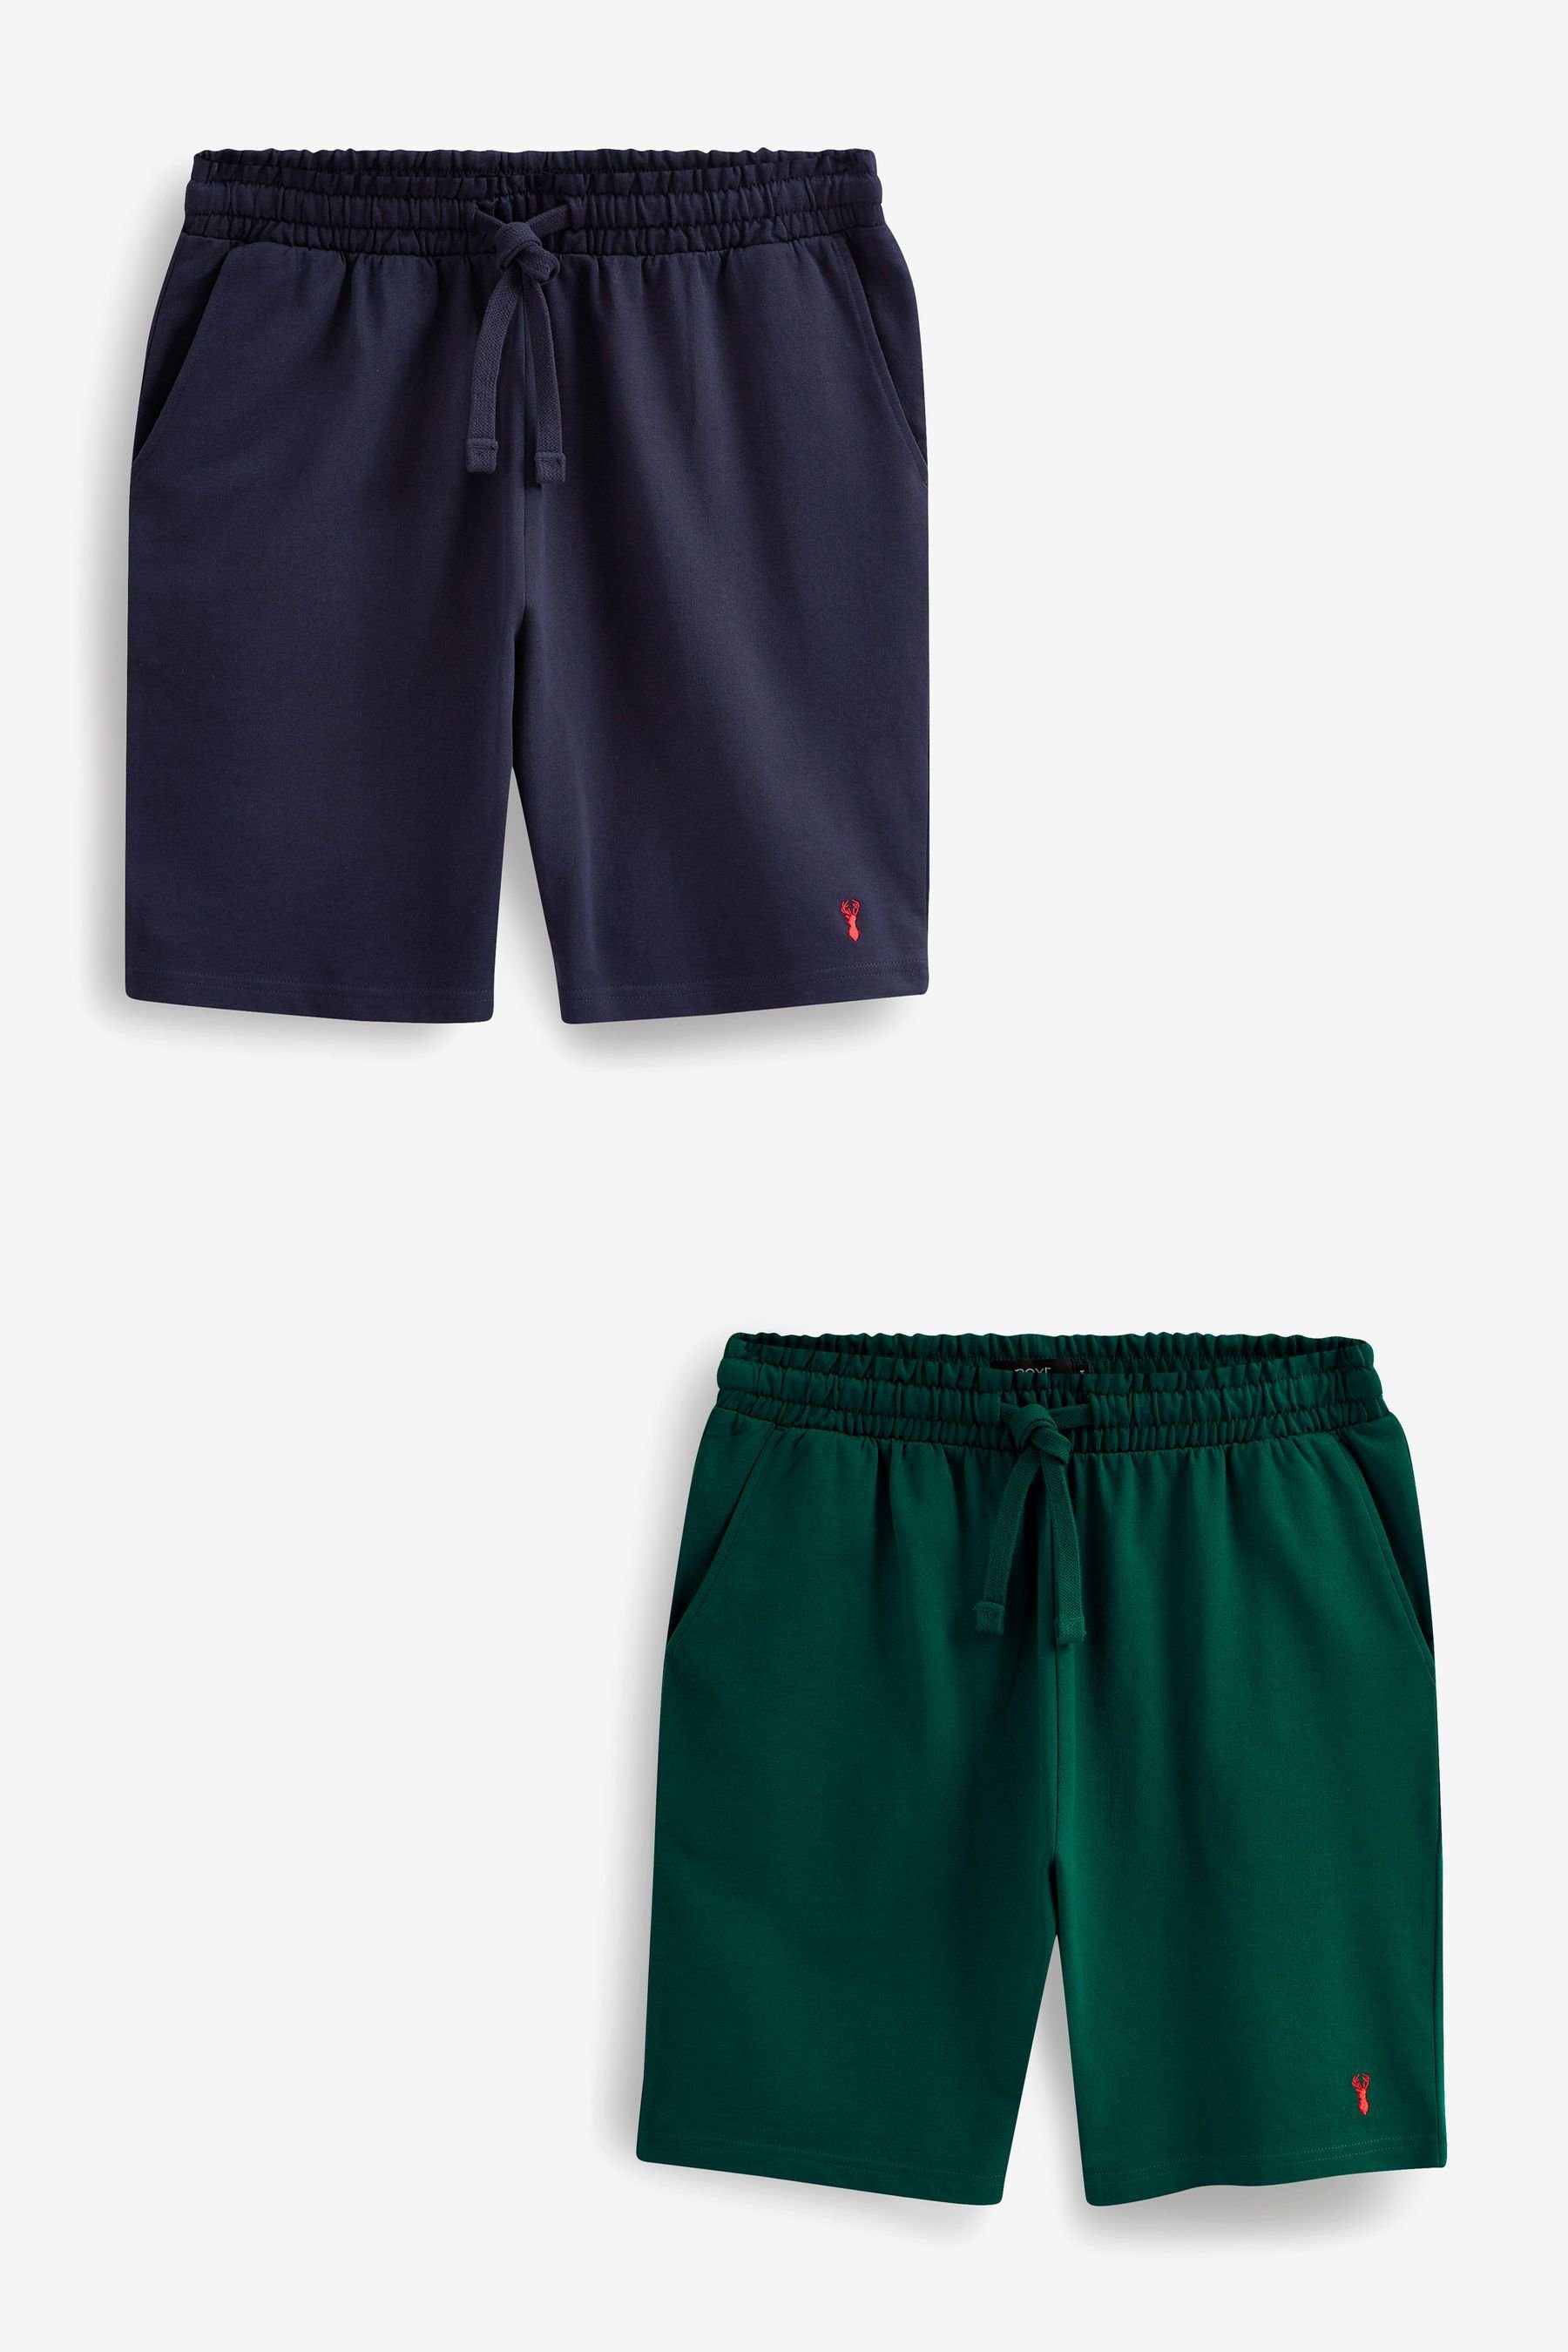 Next Schlafshorts Leichte Shorts, 2er-Pack (2-tlg) Green/Navy Blue